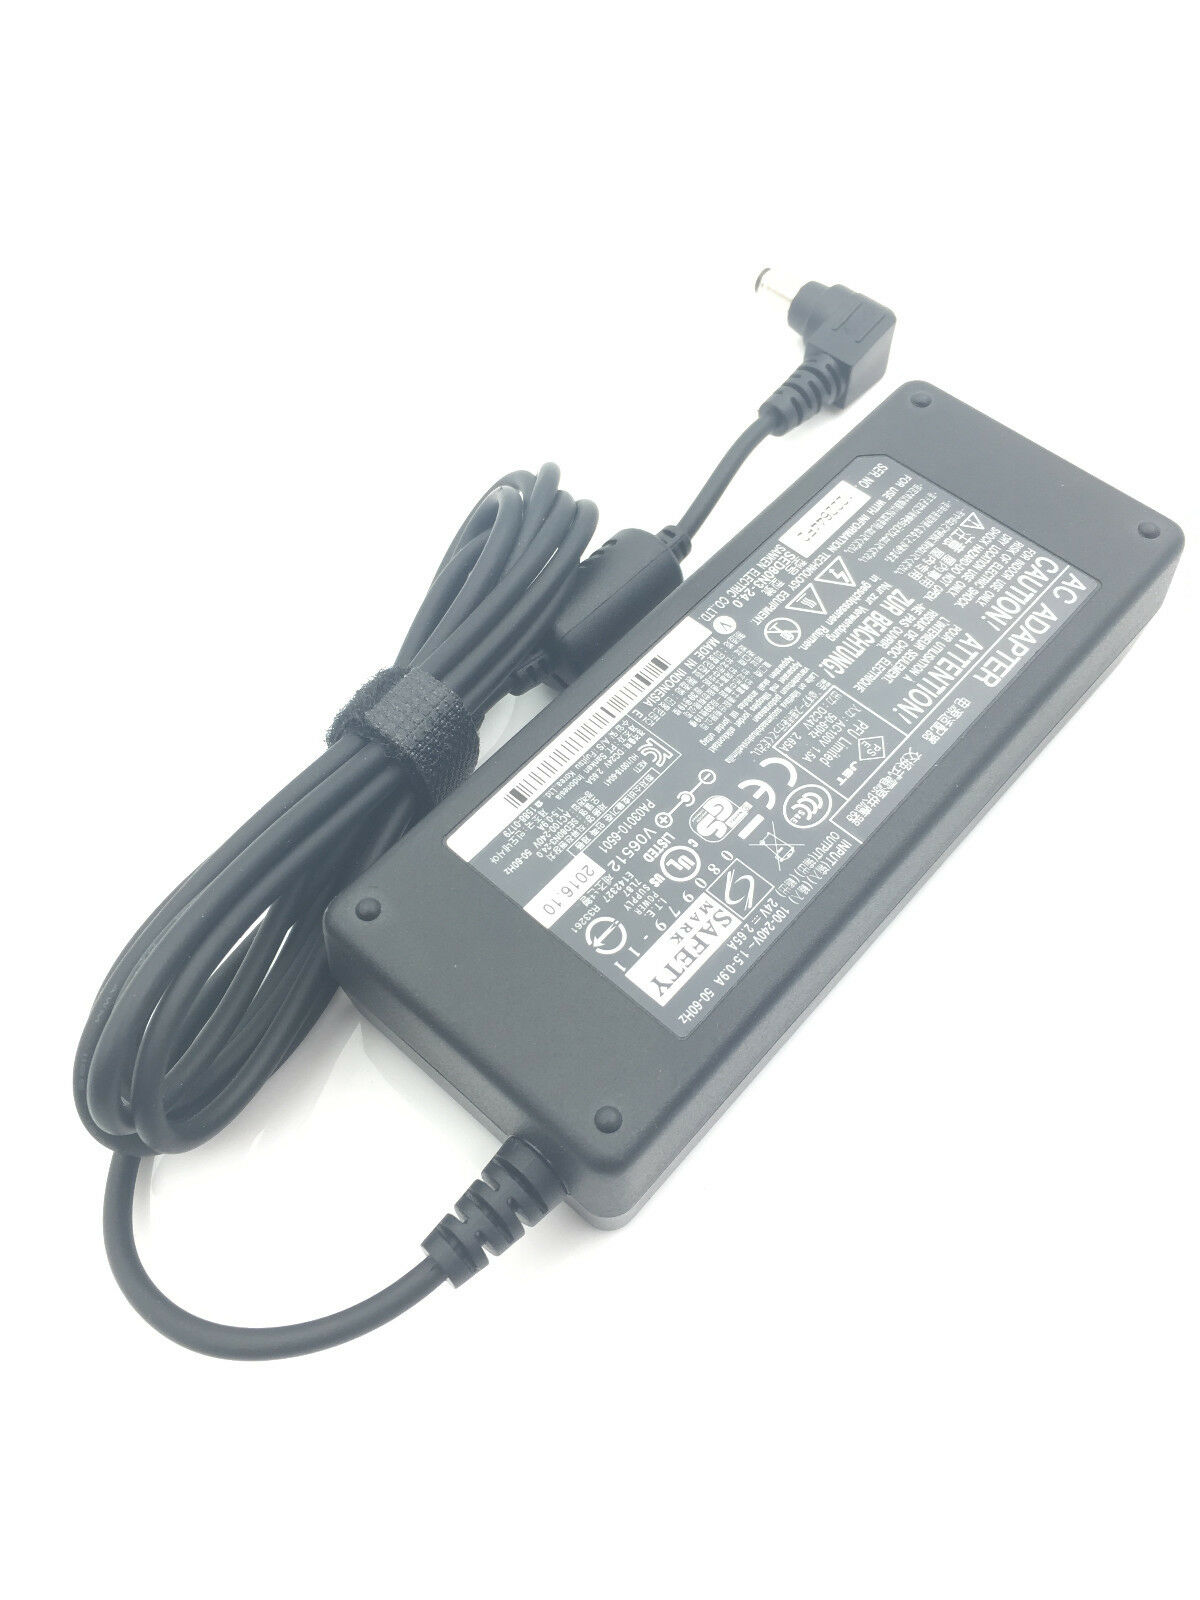 OEM QUALITY AC Power Adapter for Fujitsu fi-7160 fi-7180 fi-7260 PA03670-K905 Compatible Brand: For Fujitsu QTY: 1PC - Click Image to Close